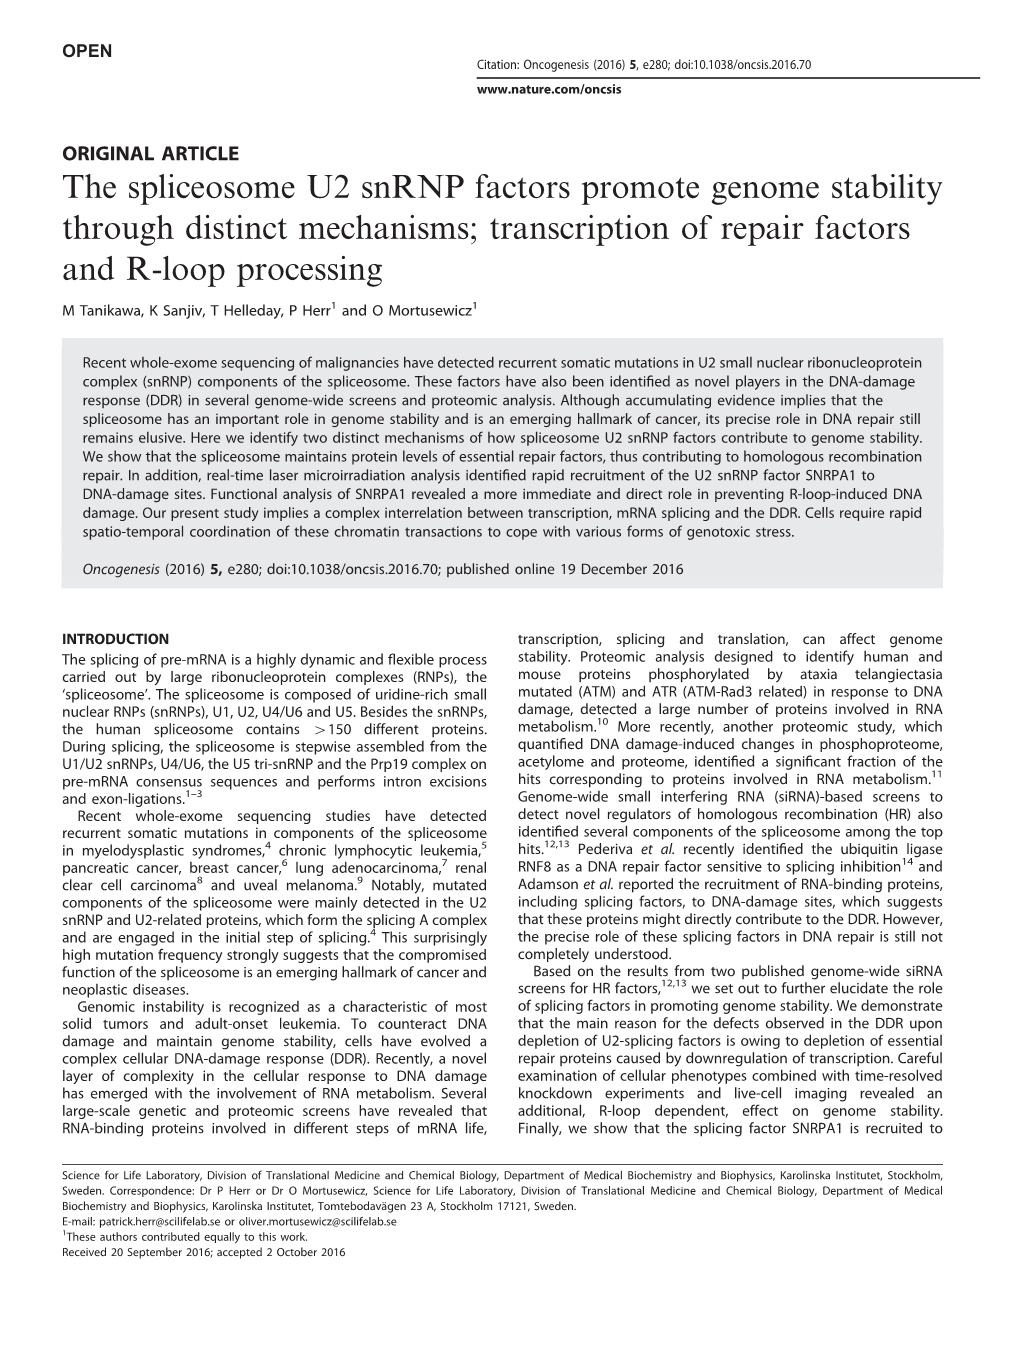 The Spliceosome U2 Snrnp Factors Promote Genome Stability Through Distinct Mechanisms; Transcription of Repair Factors and R-Loop Processing